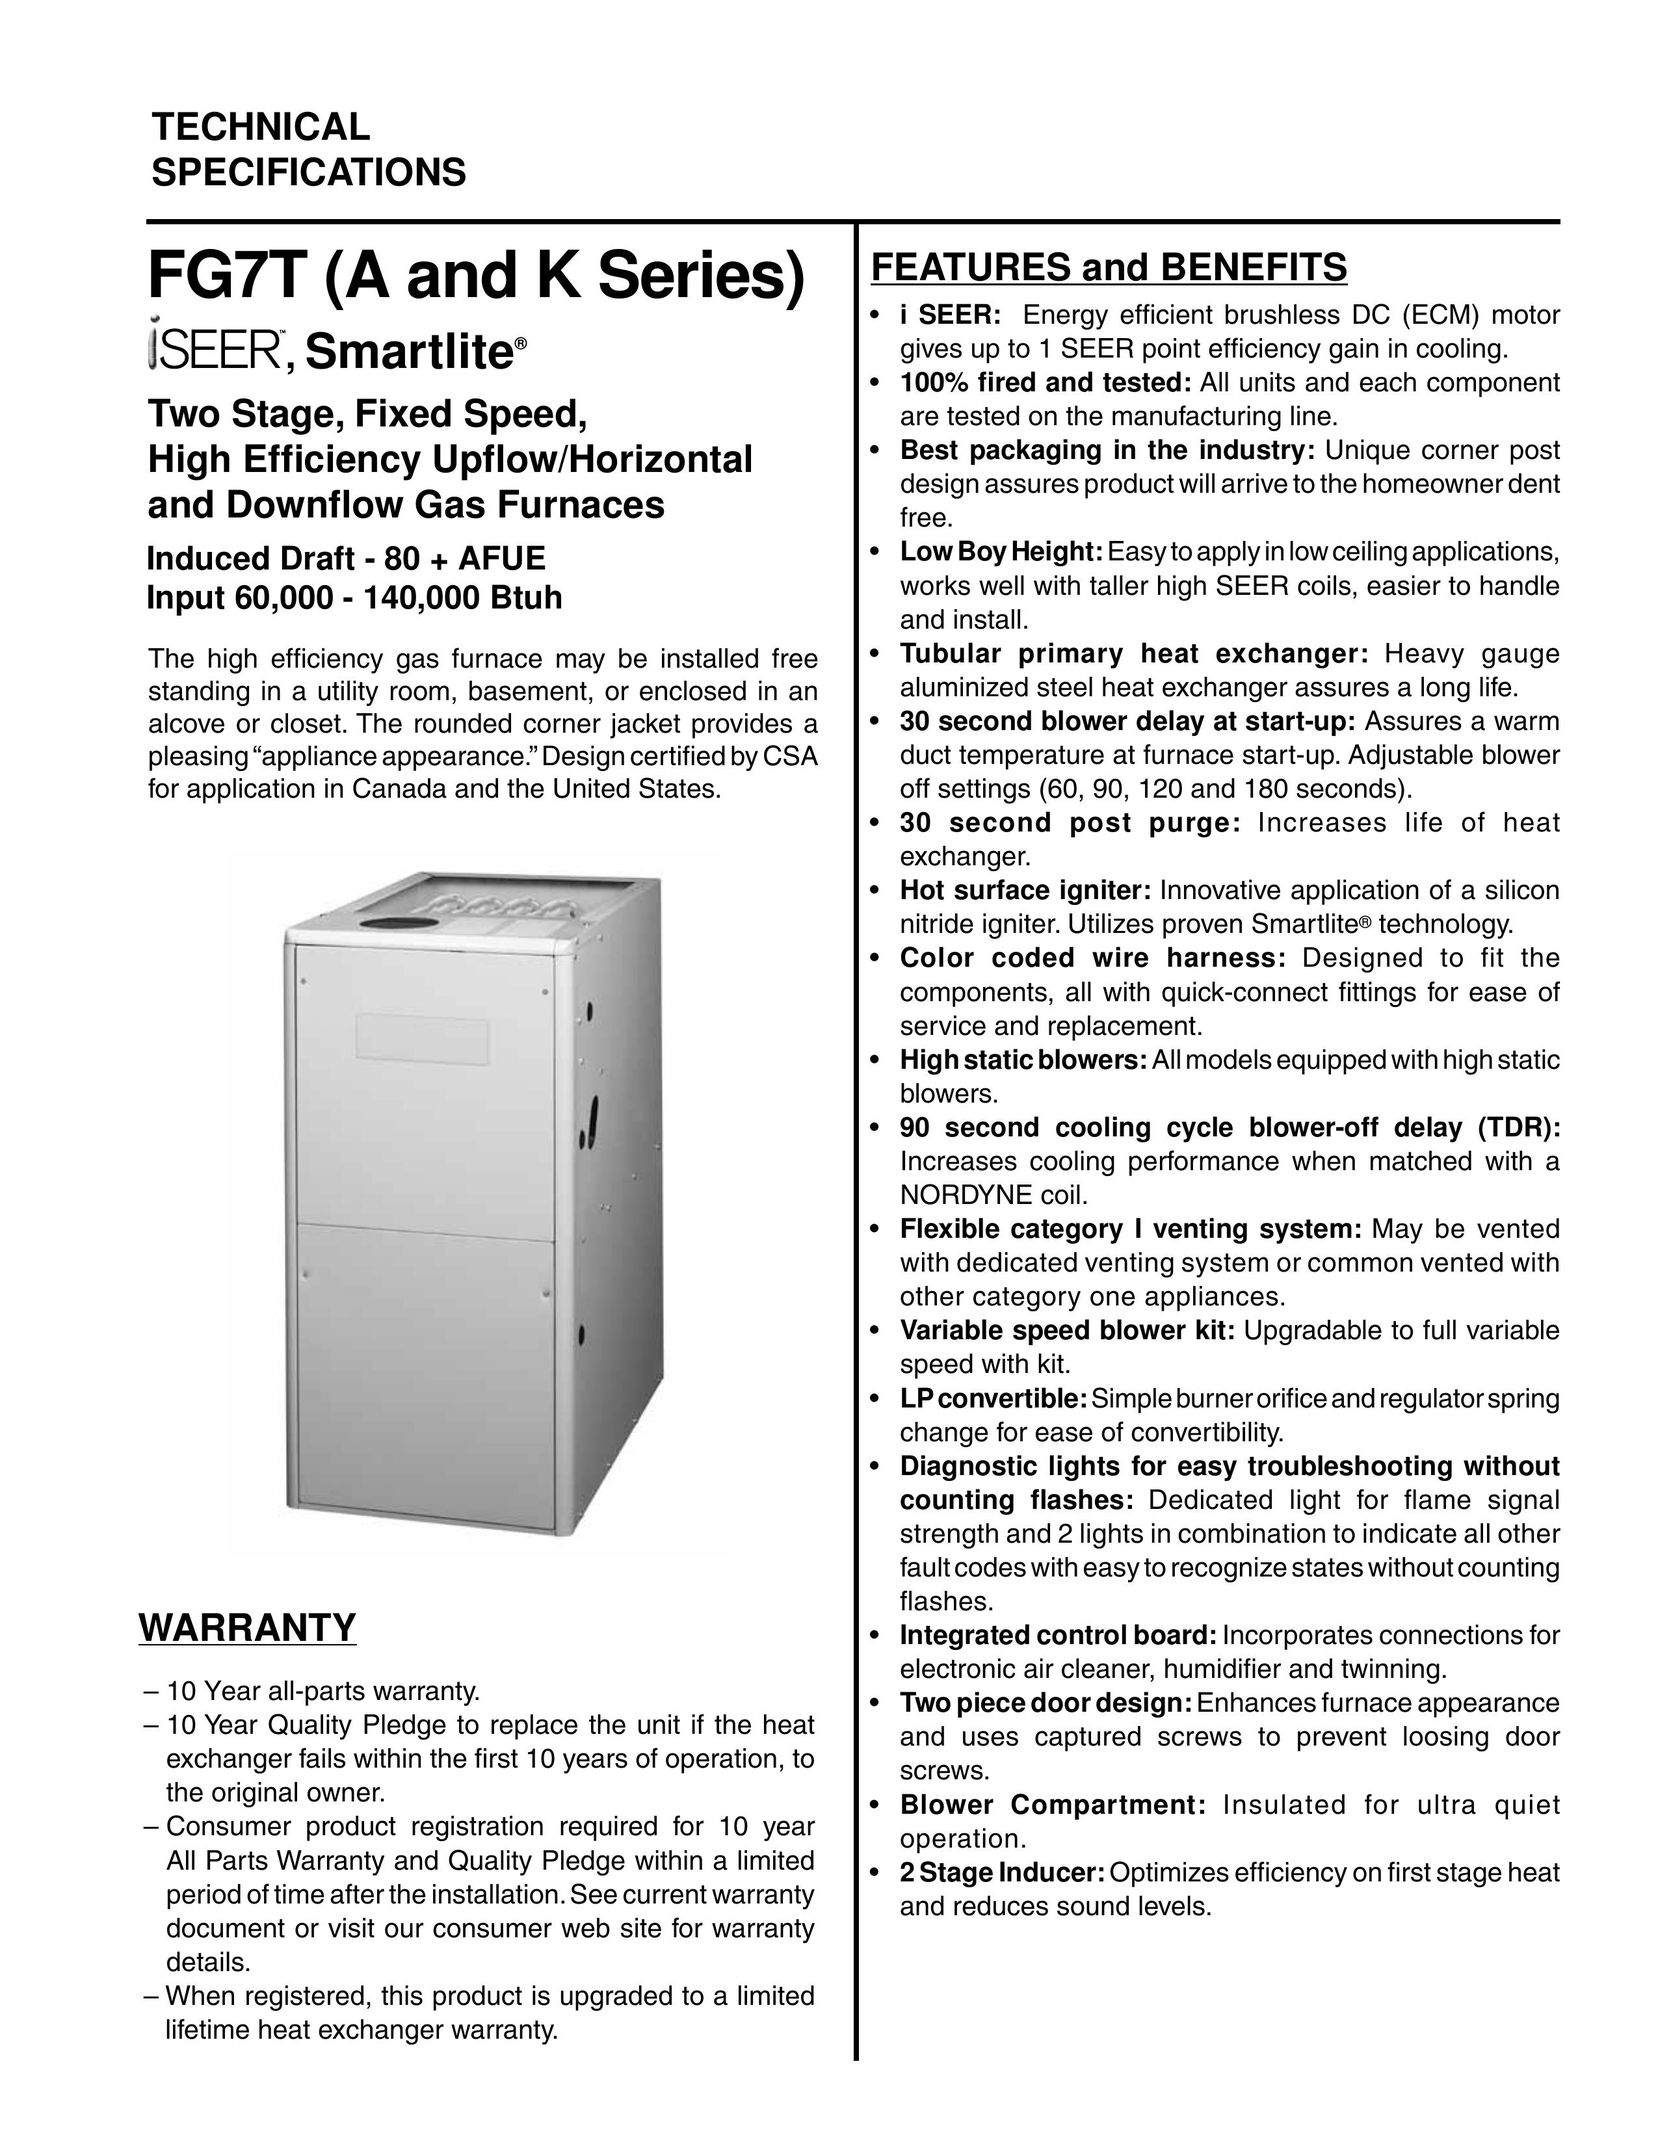 Nordyne FG7T Furnace User Manual